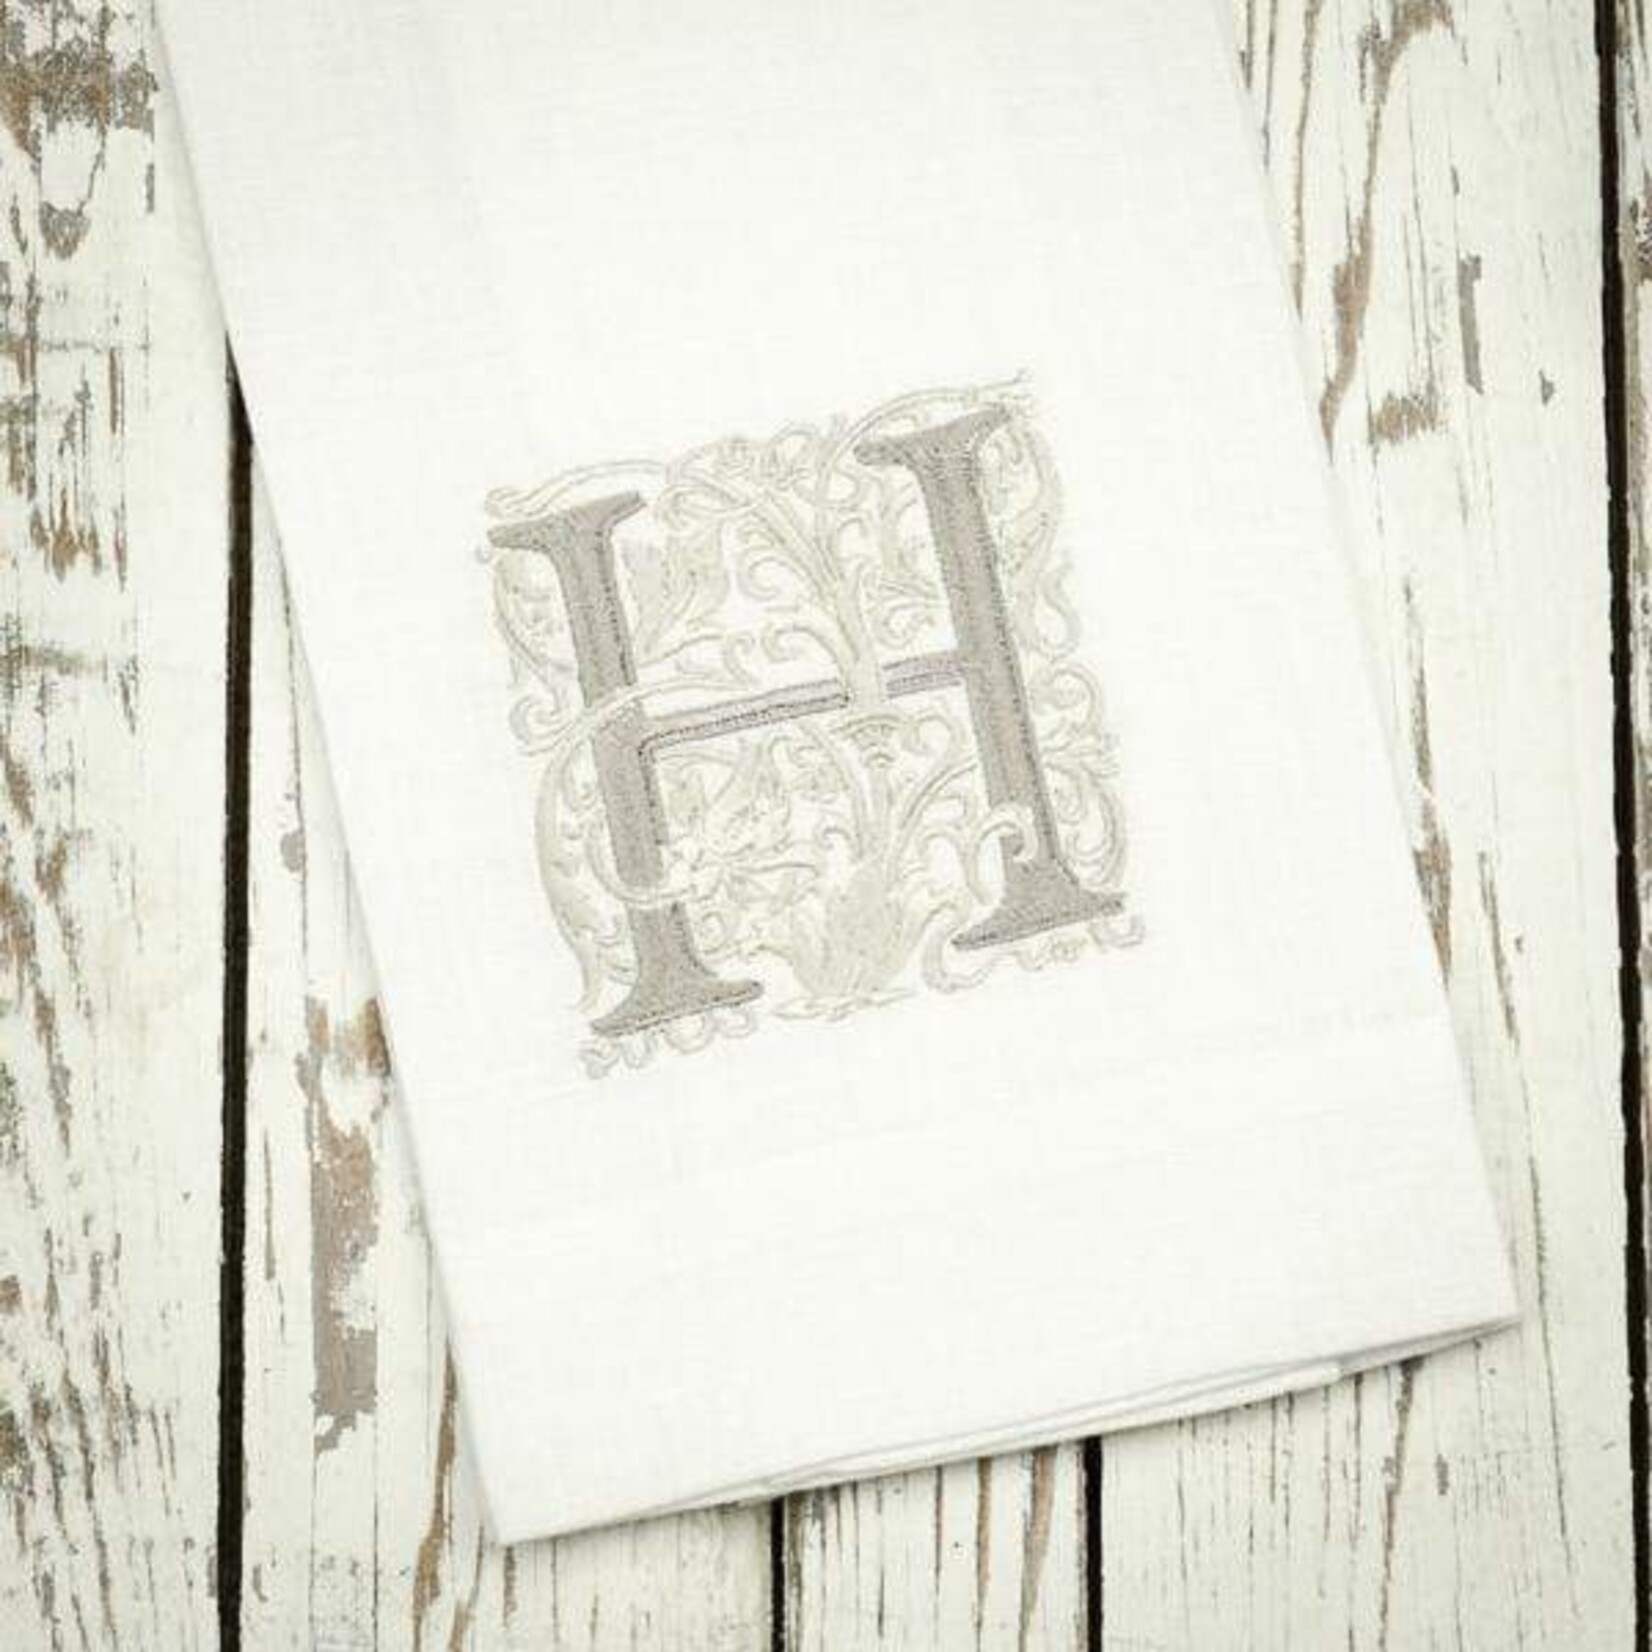 Crown Linen Designs Monogram Linen White Taupe Towel